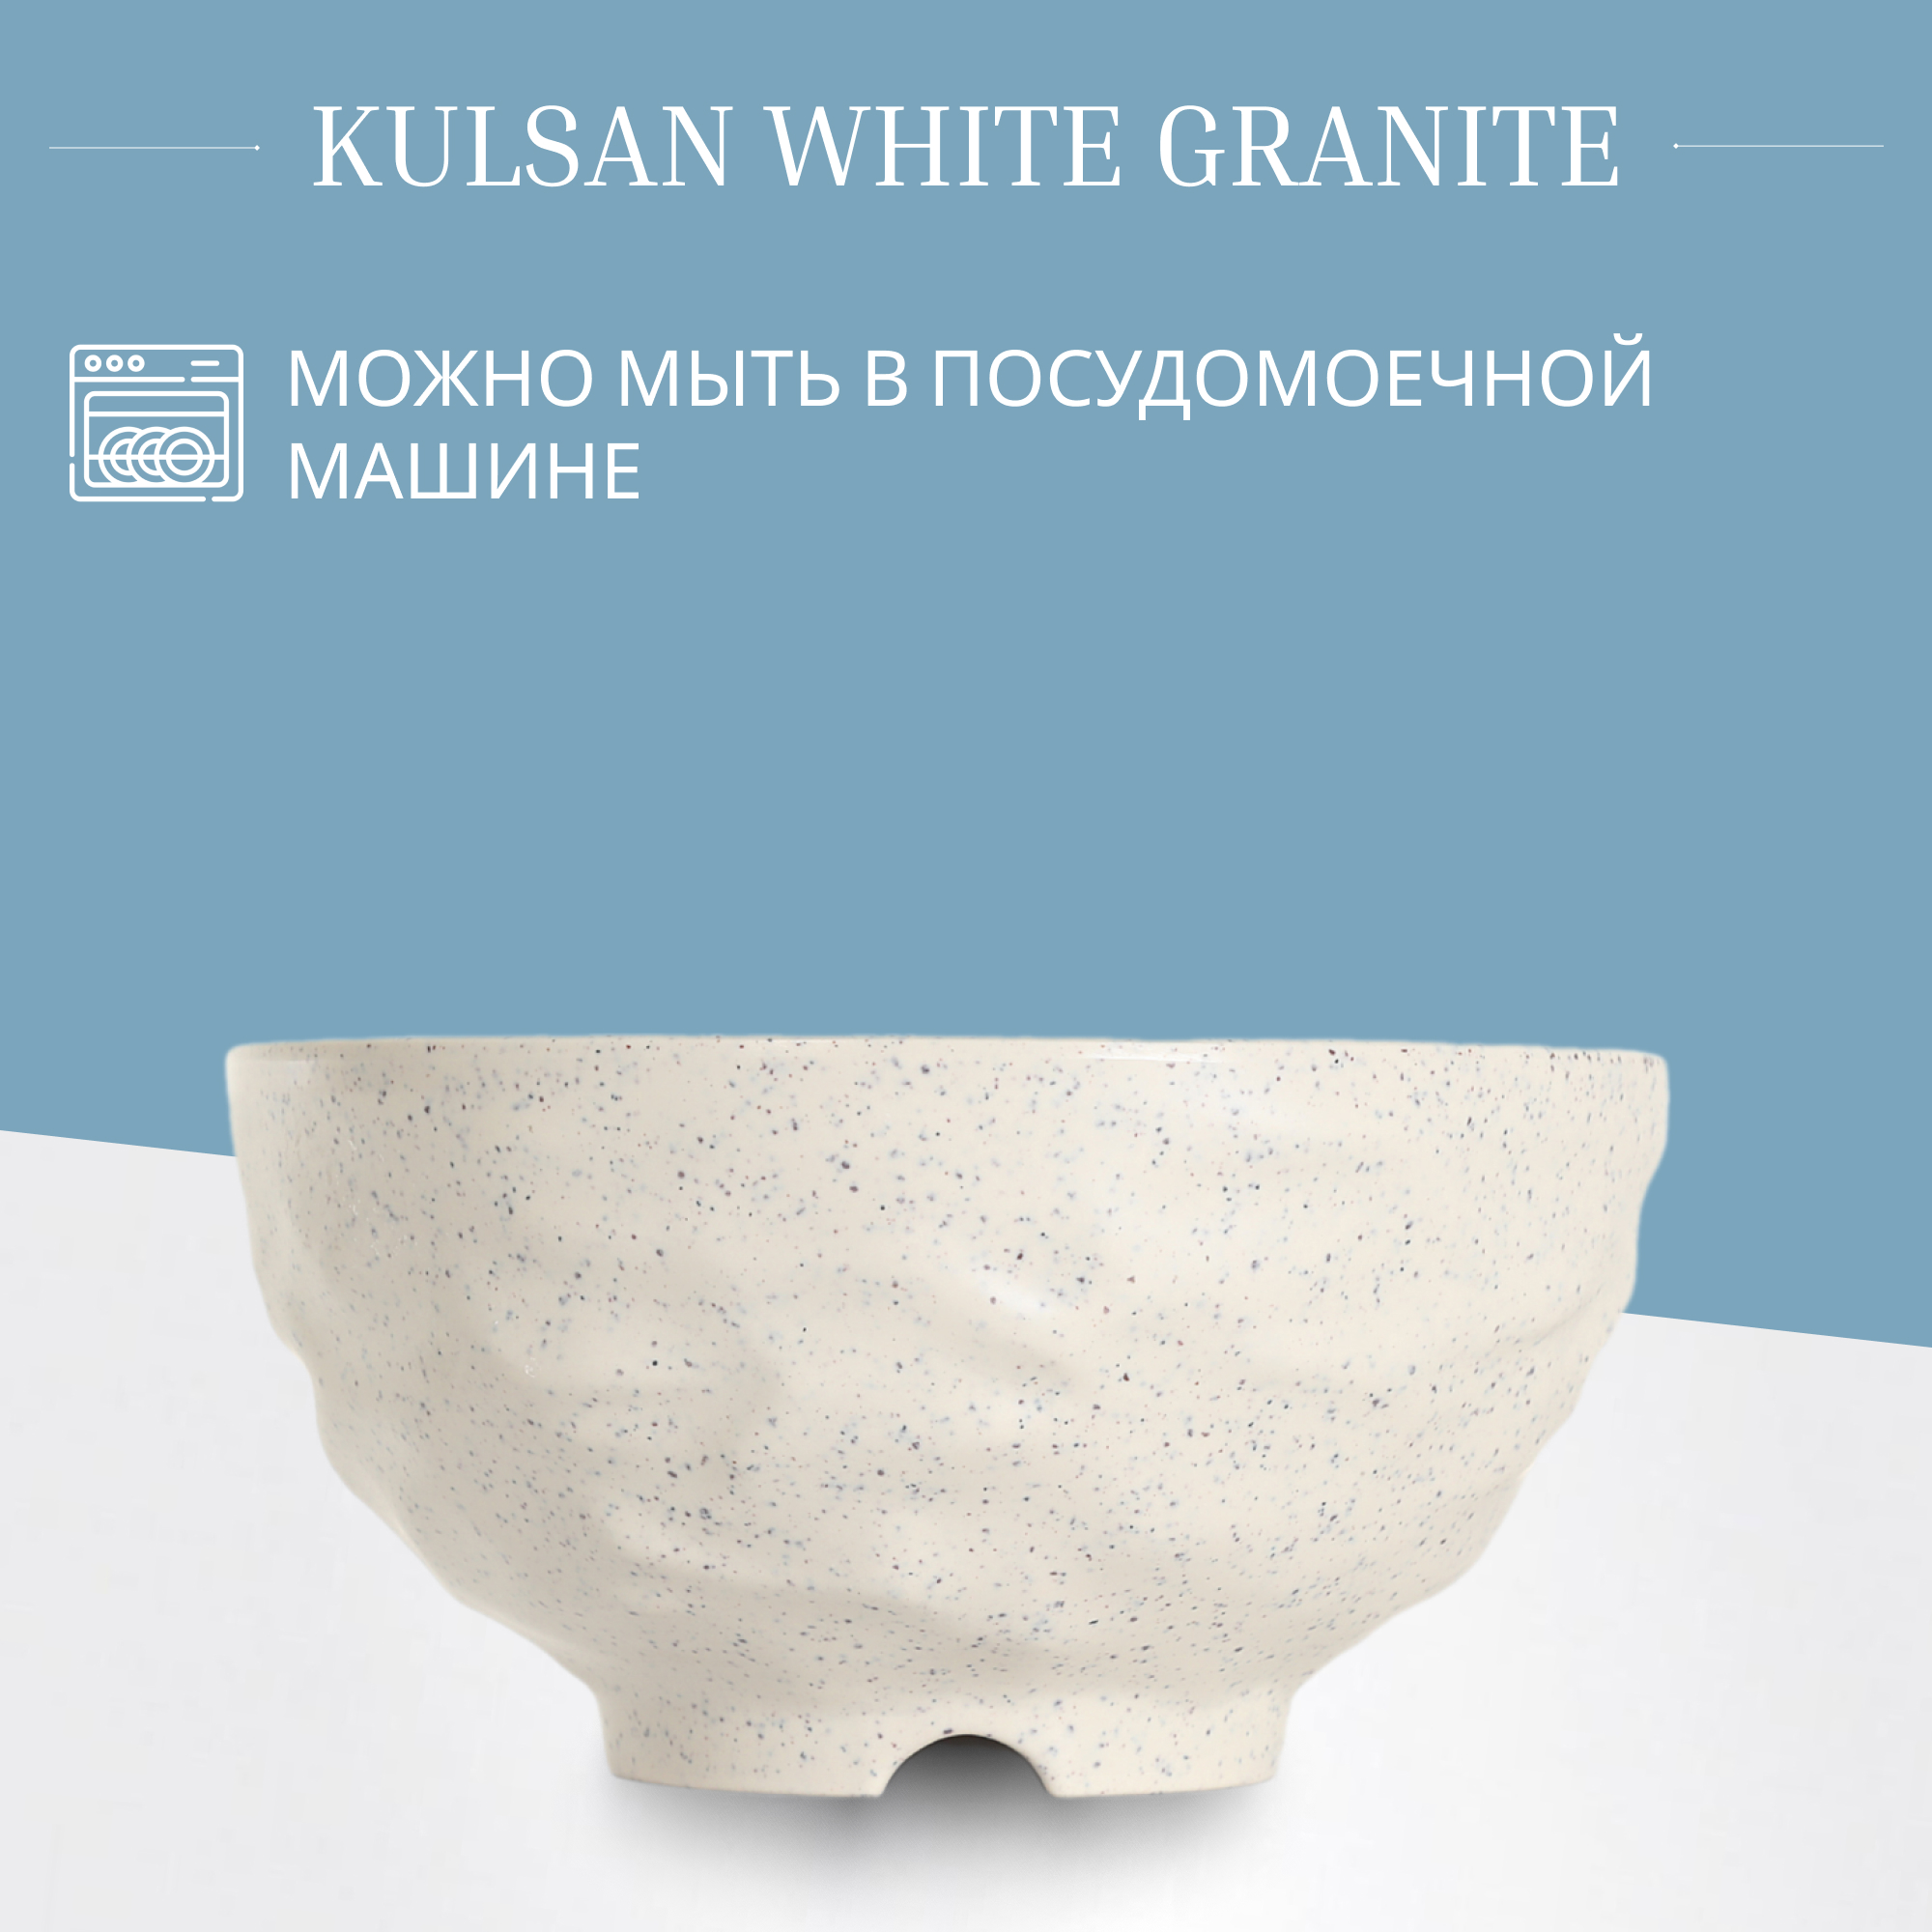 Салатница Kulsan White granite 20 см, цвет слоновая кость - фото 3